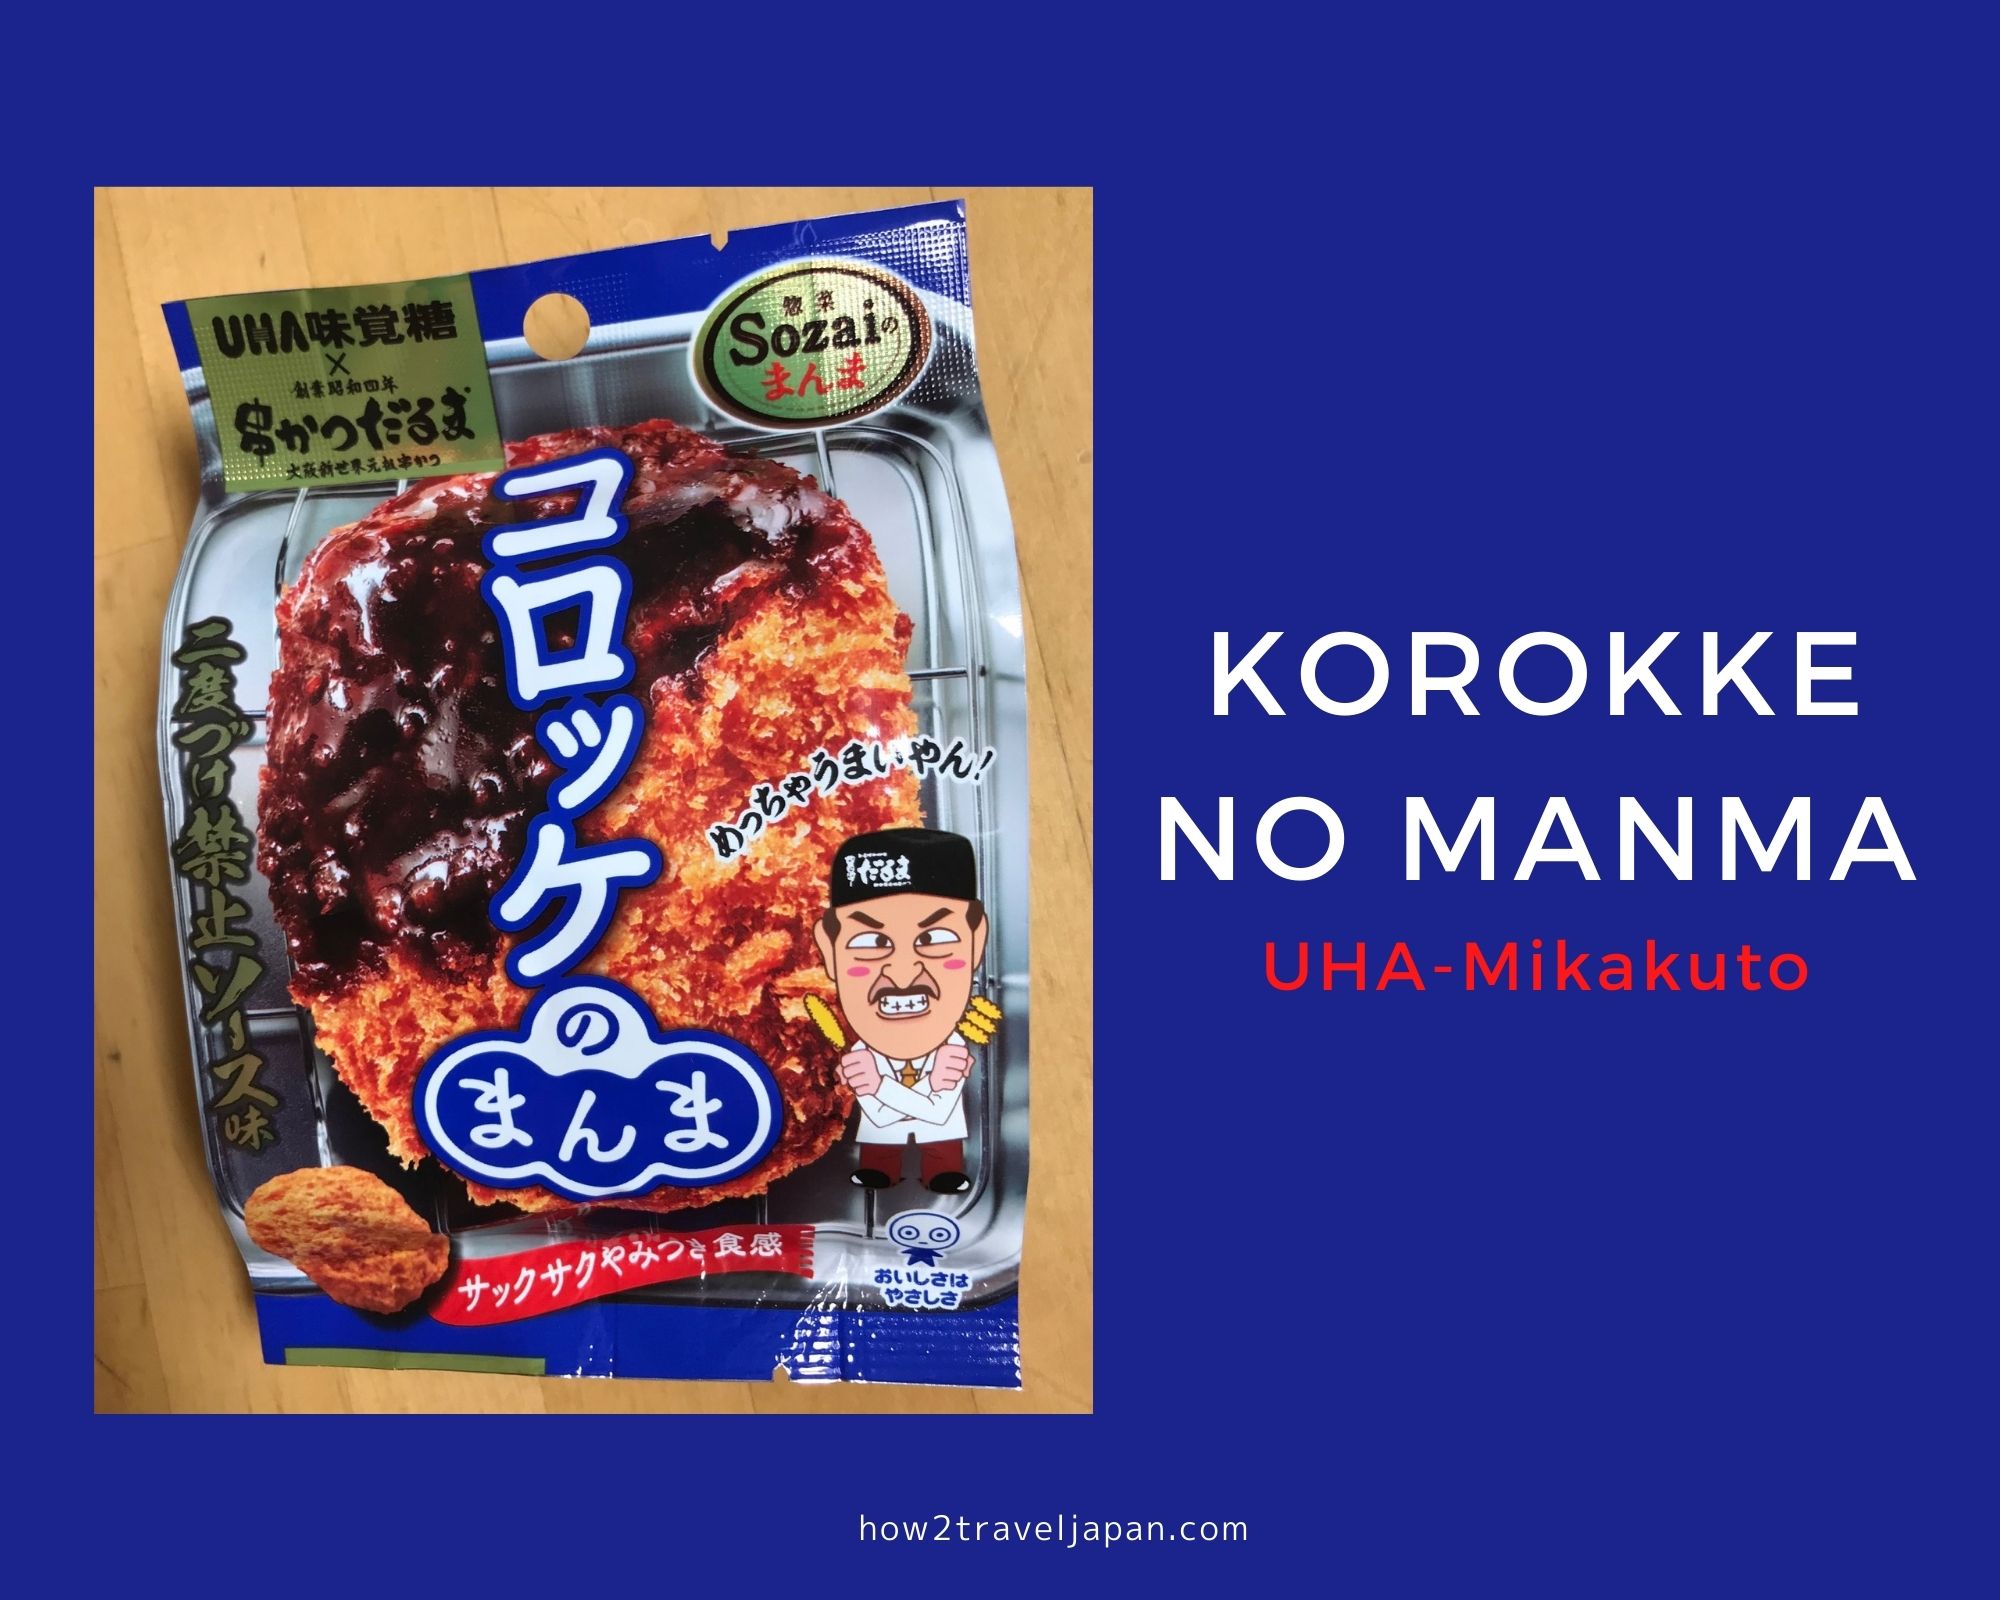 You are currently viewing 【Korokke no manma】 from UHA Mikakuto